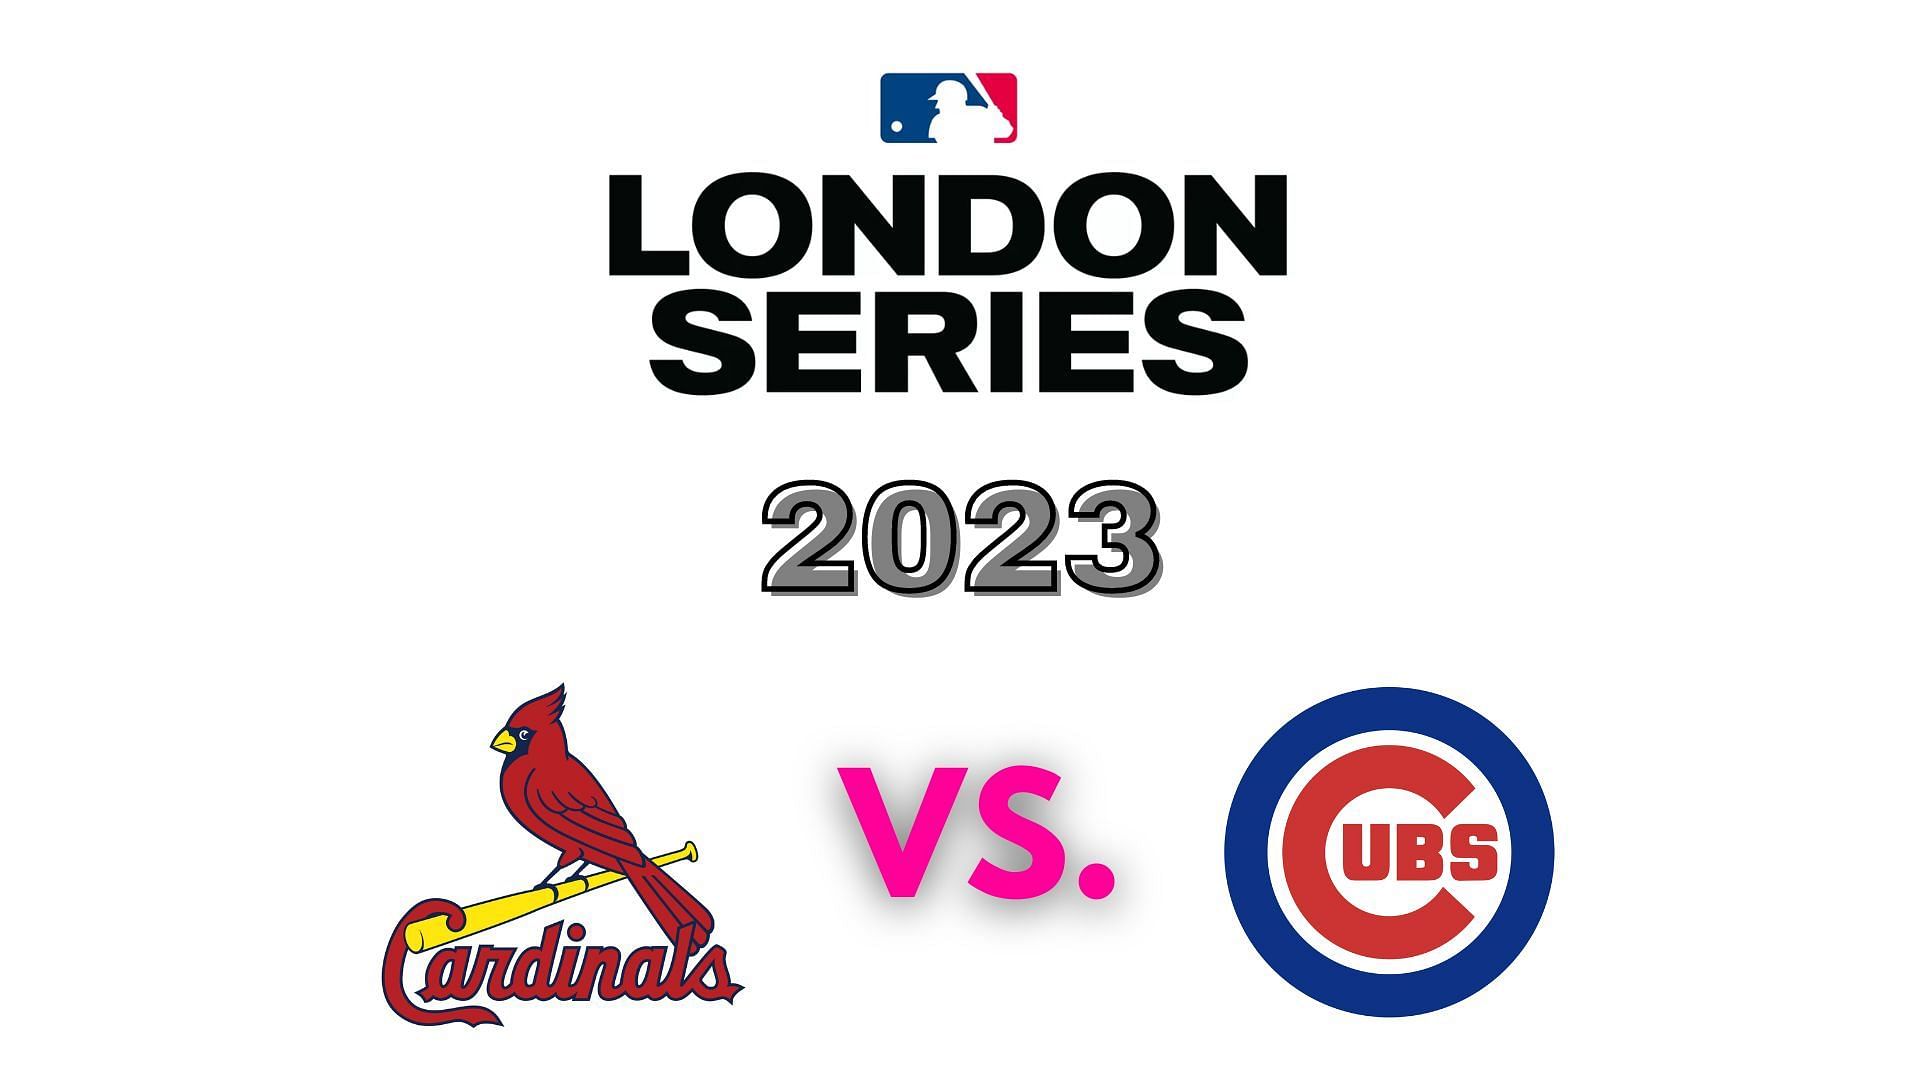 Cubs V Cardinals London 2023 Tickets